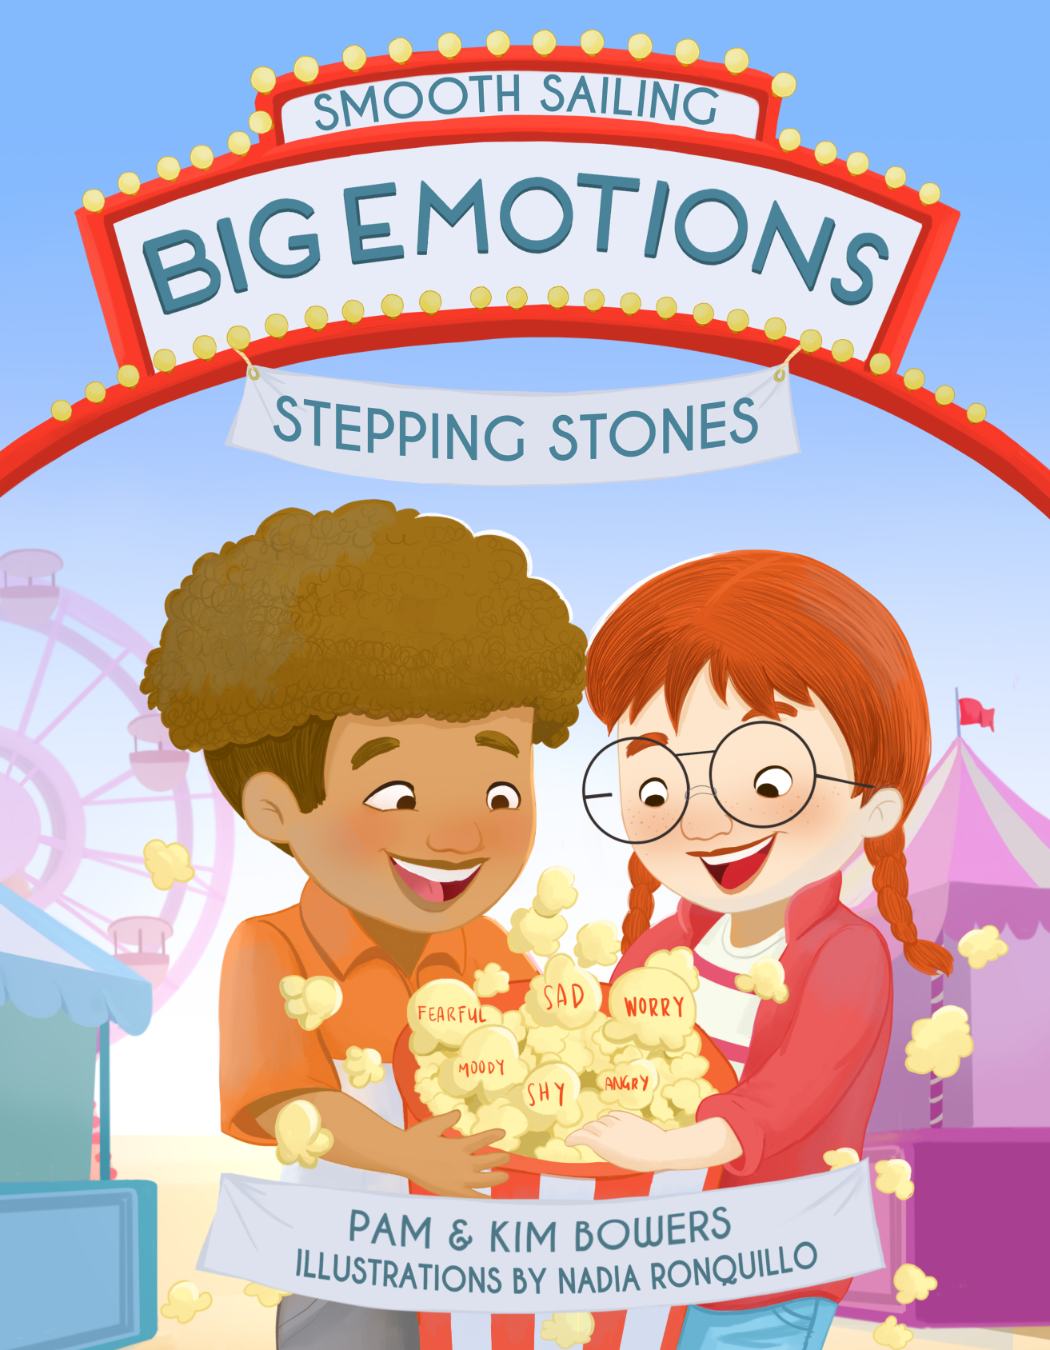 big emotions children's book illustrator